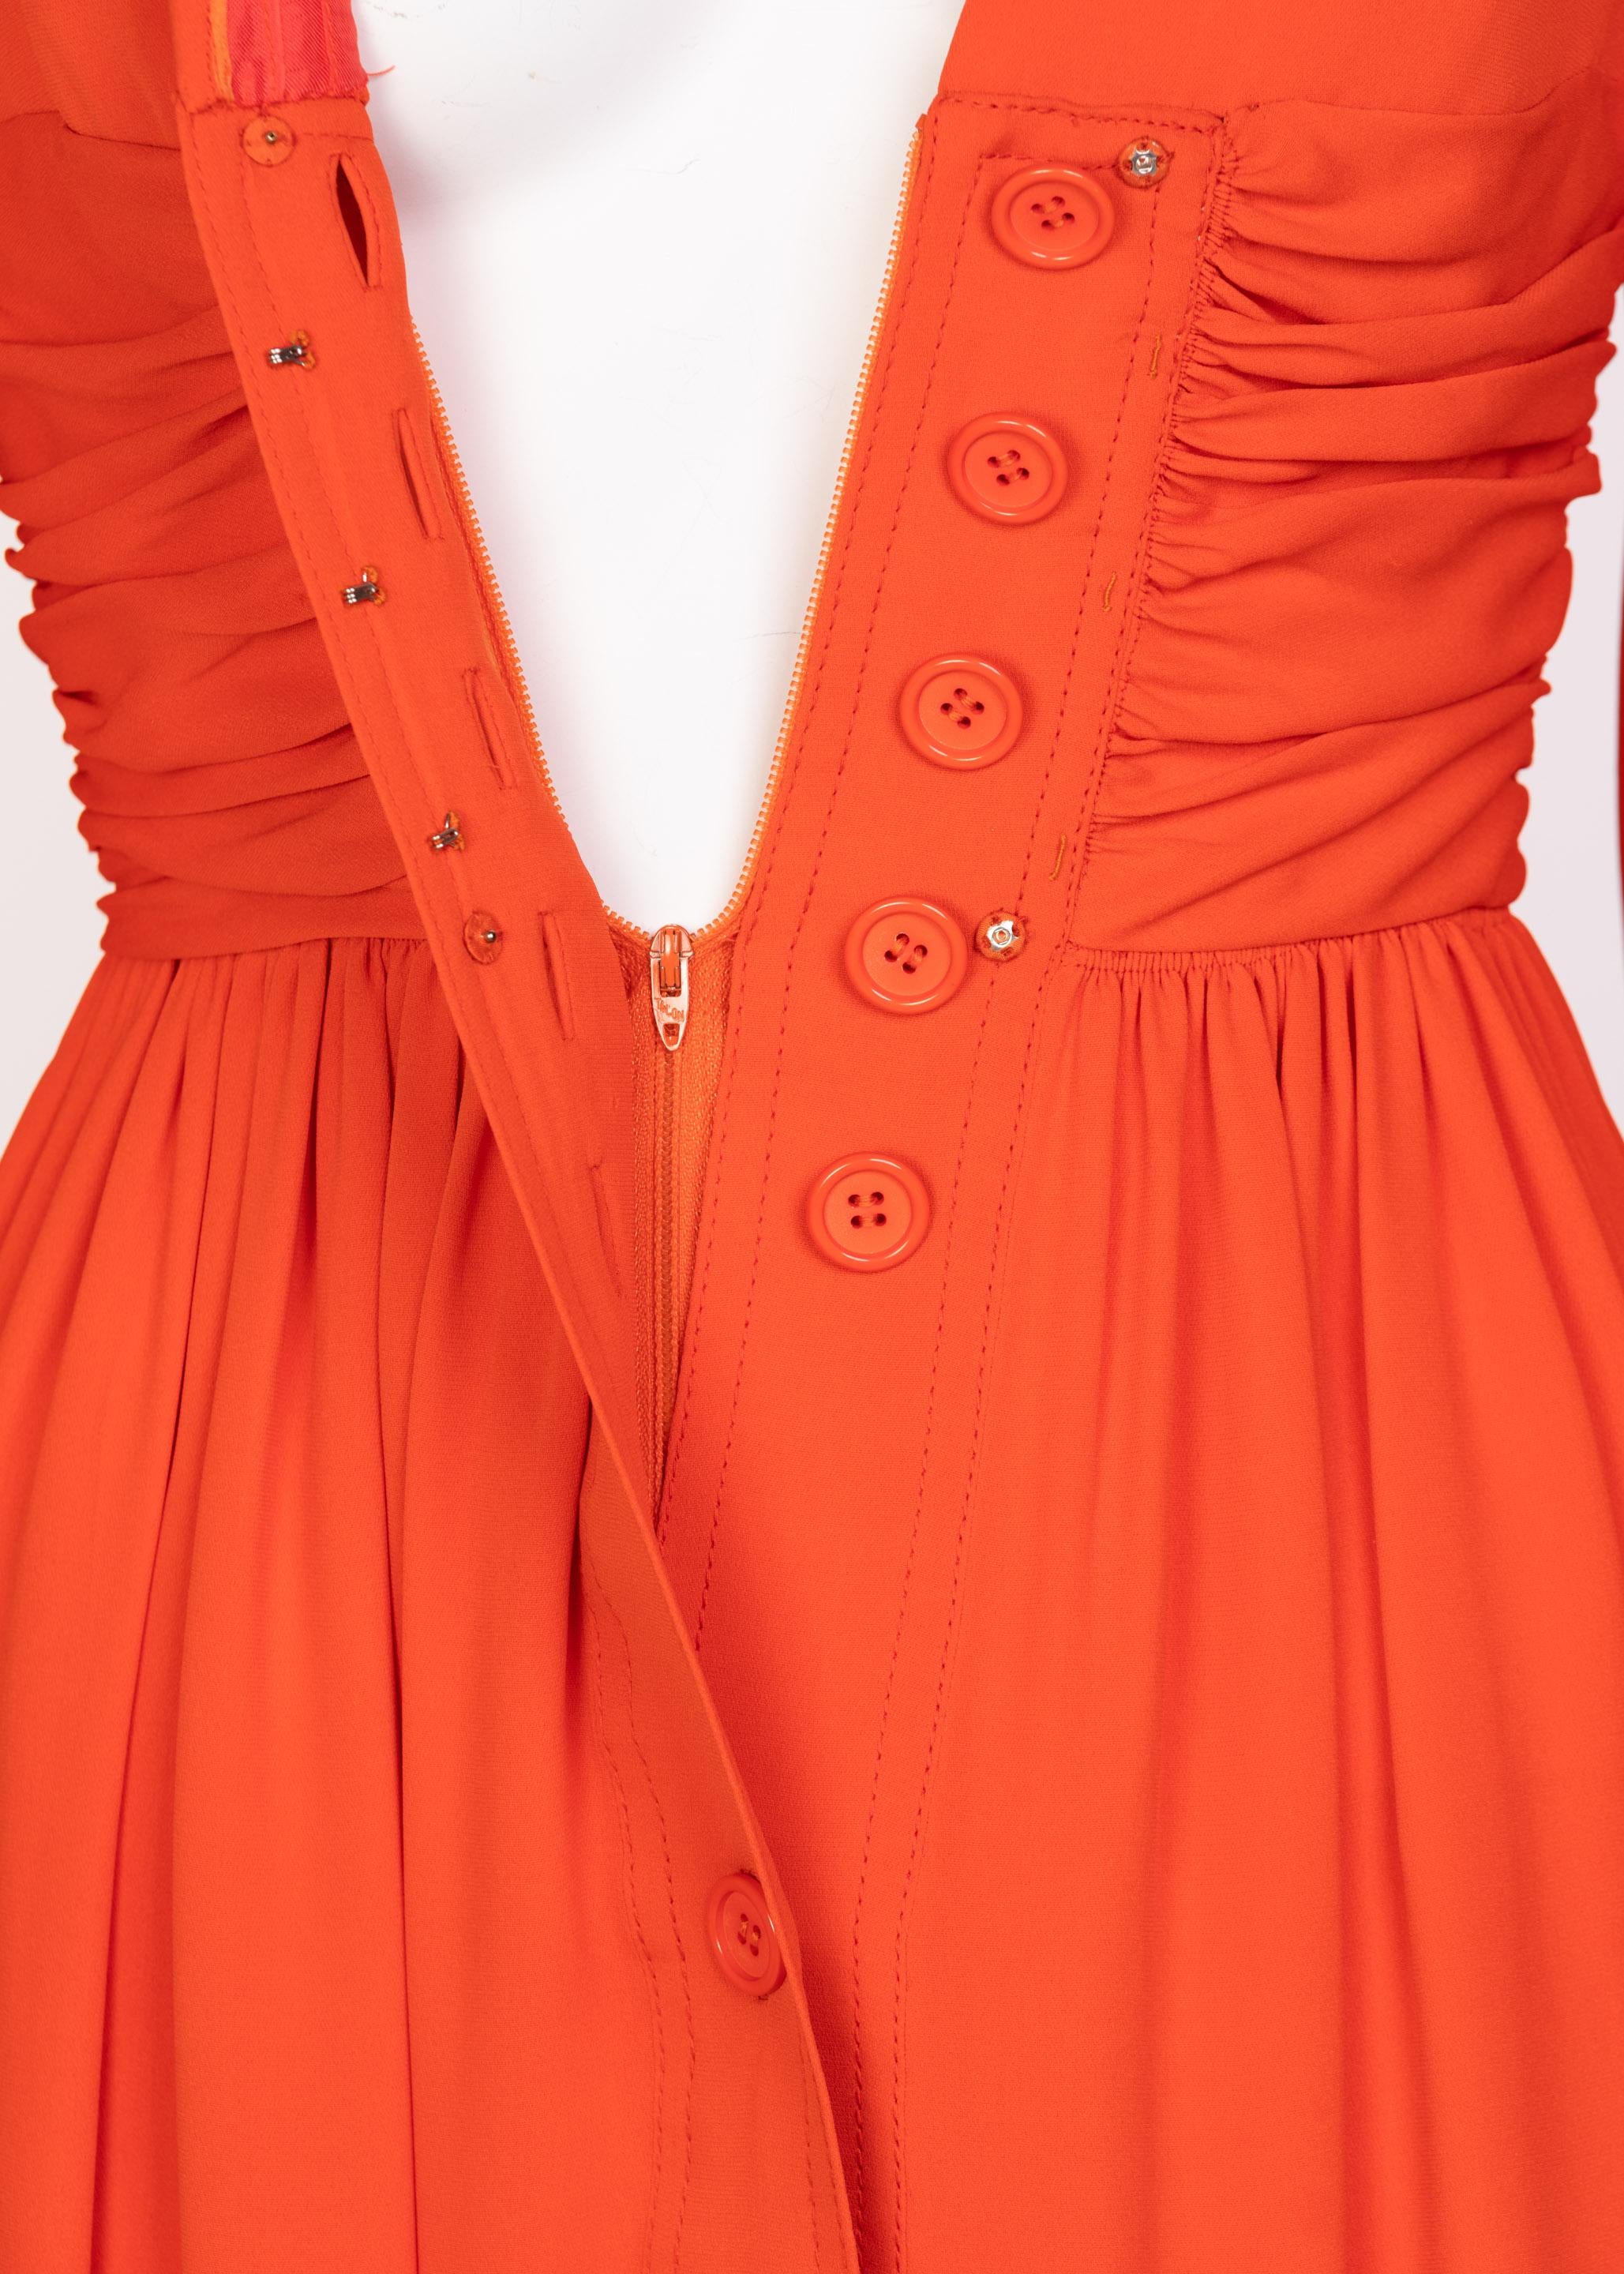 Galanos Orange Silk Plunge Neck Bishop Sleeve Dress, 1970s For Sale 4